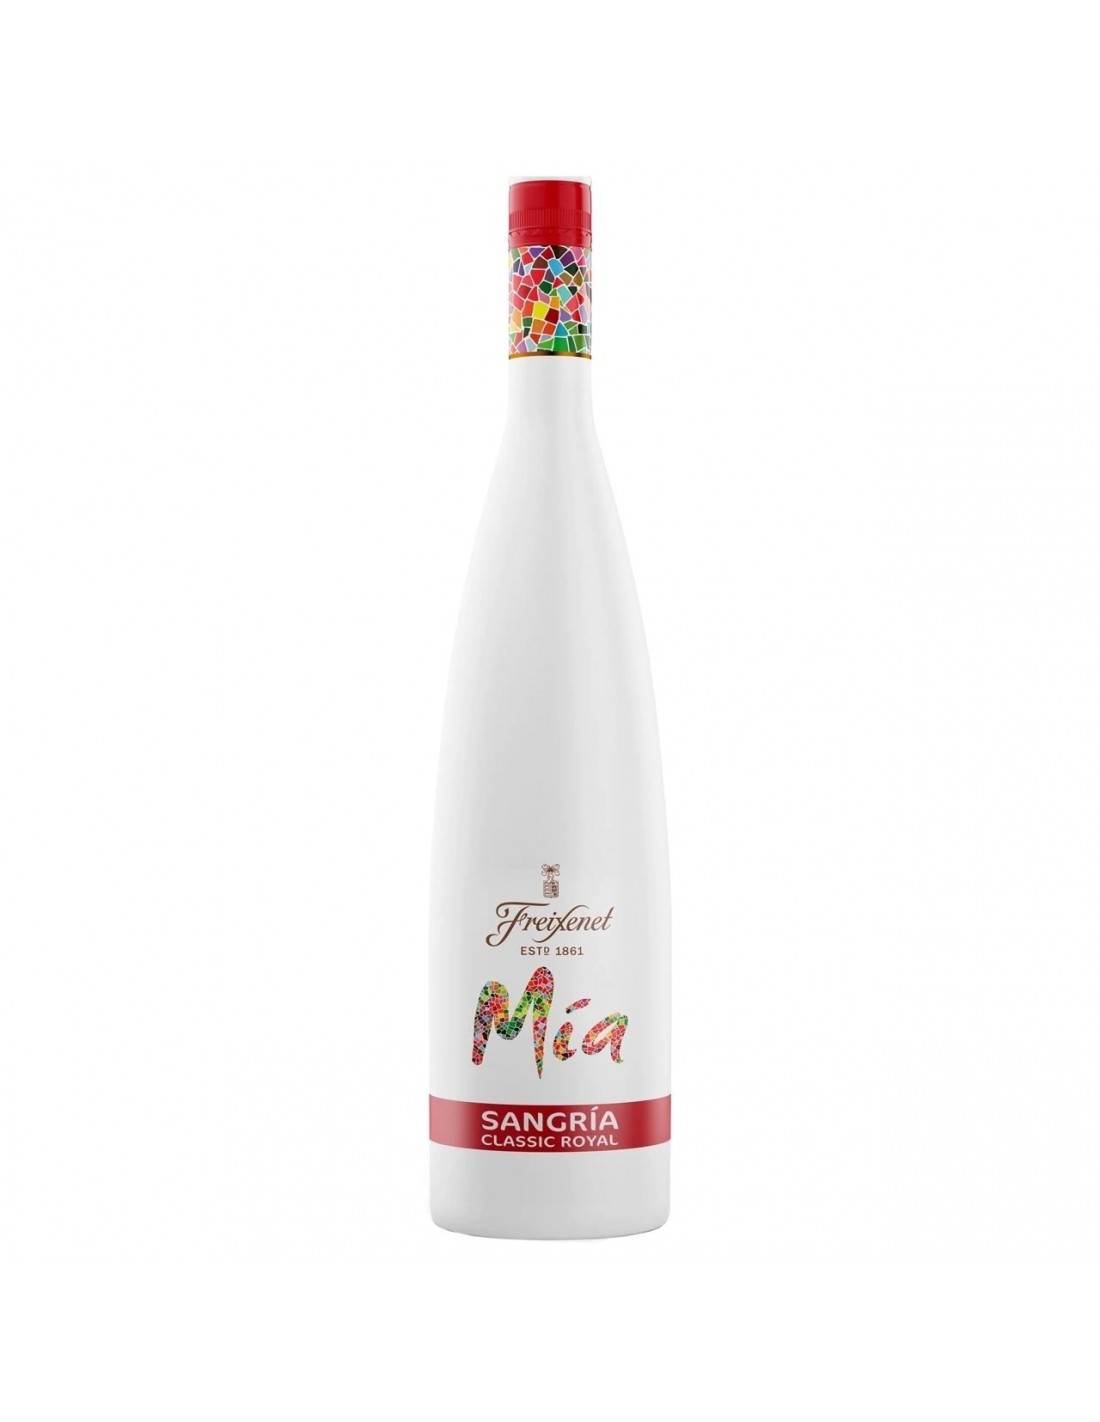 Cocktail Sangria, Freixenet Mia Classic Royal, 8.5% alc., 0.75L, Spania alcooldiscount.ro